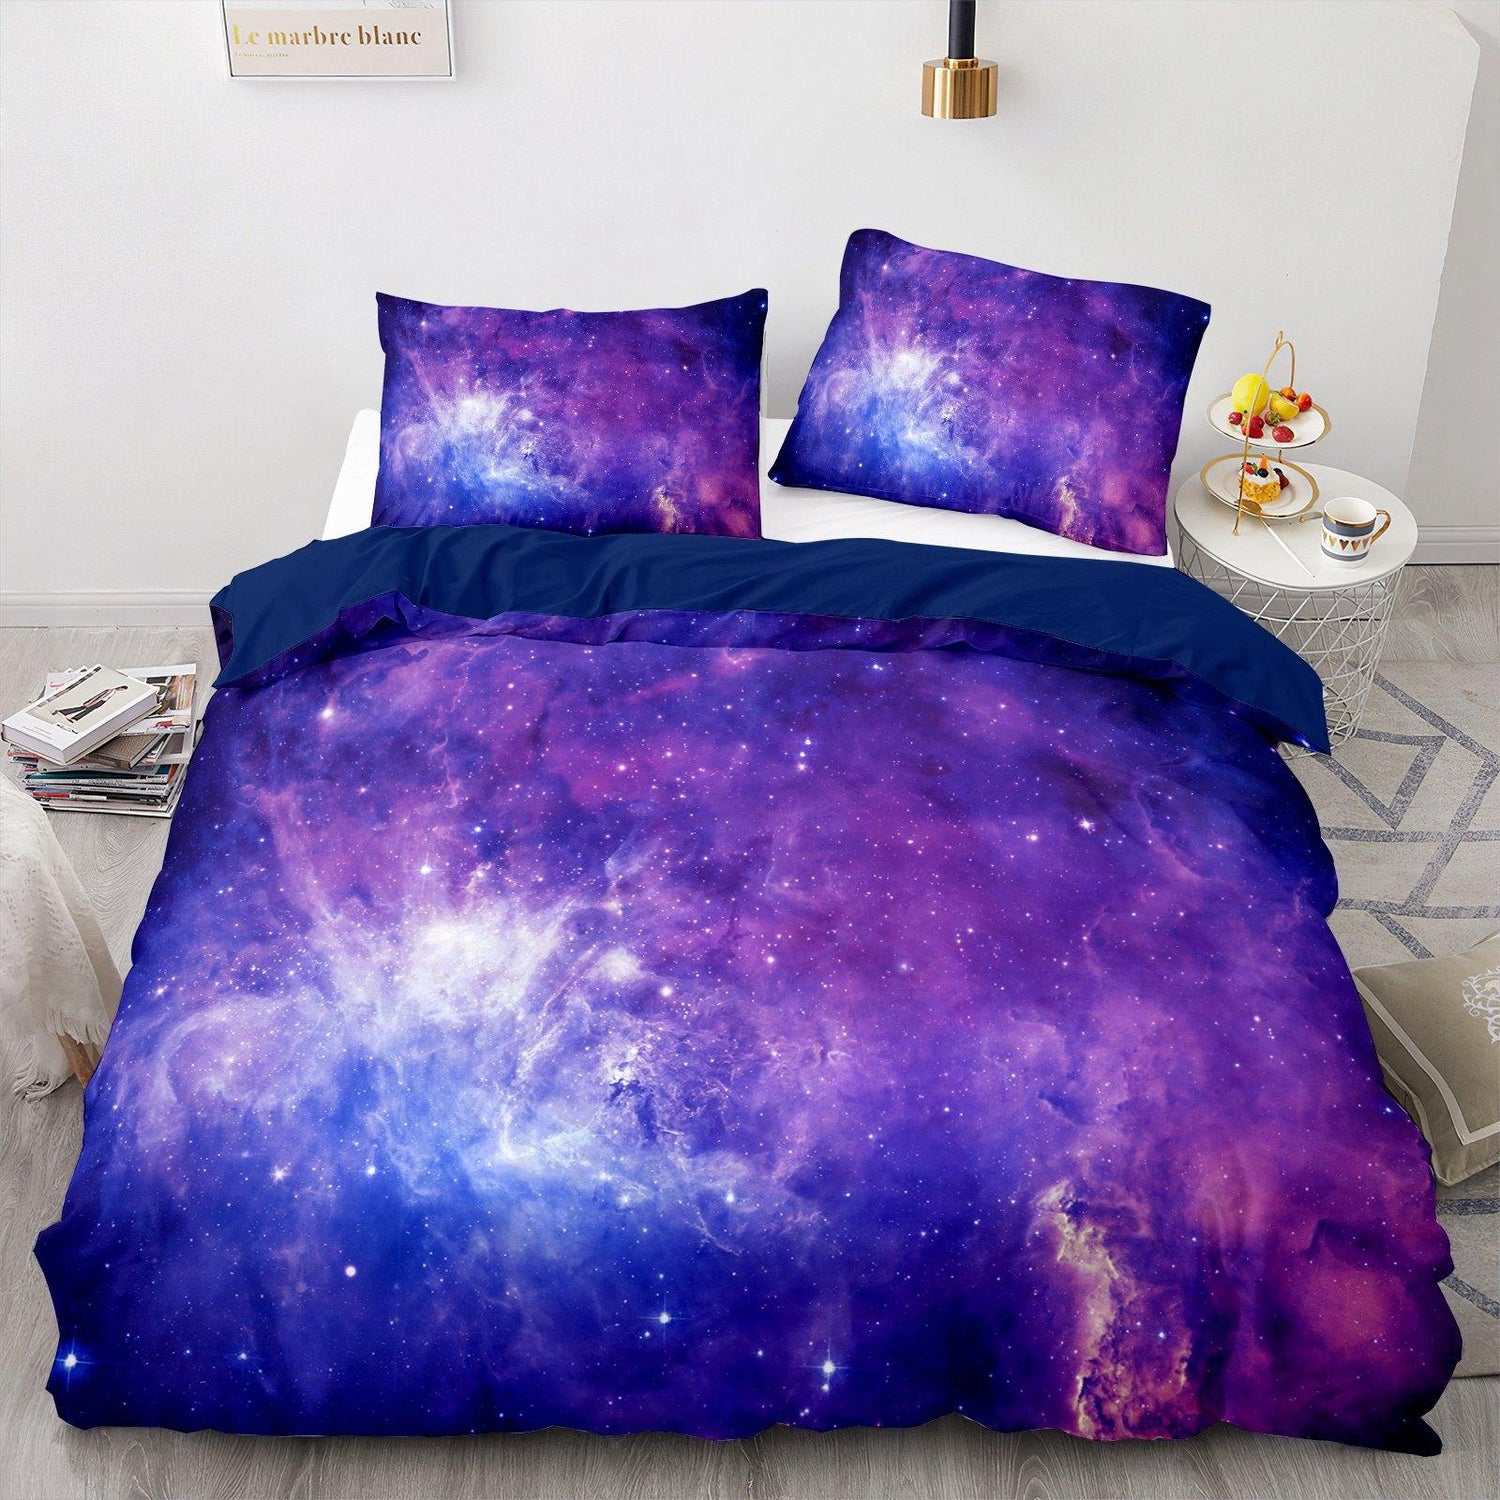 WONGS BEDDING Starry Sky Bedding Bedroom Home Kit - Wongs bedding